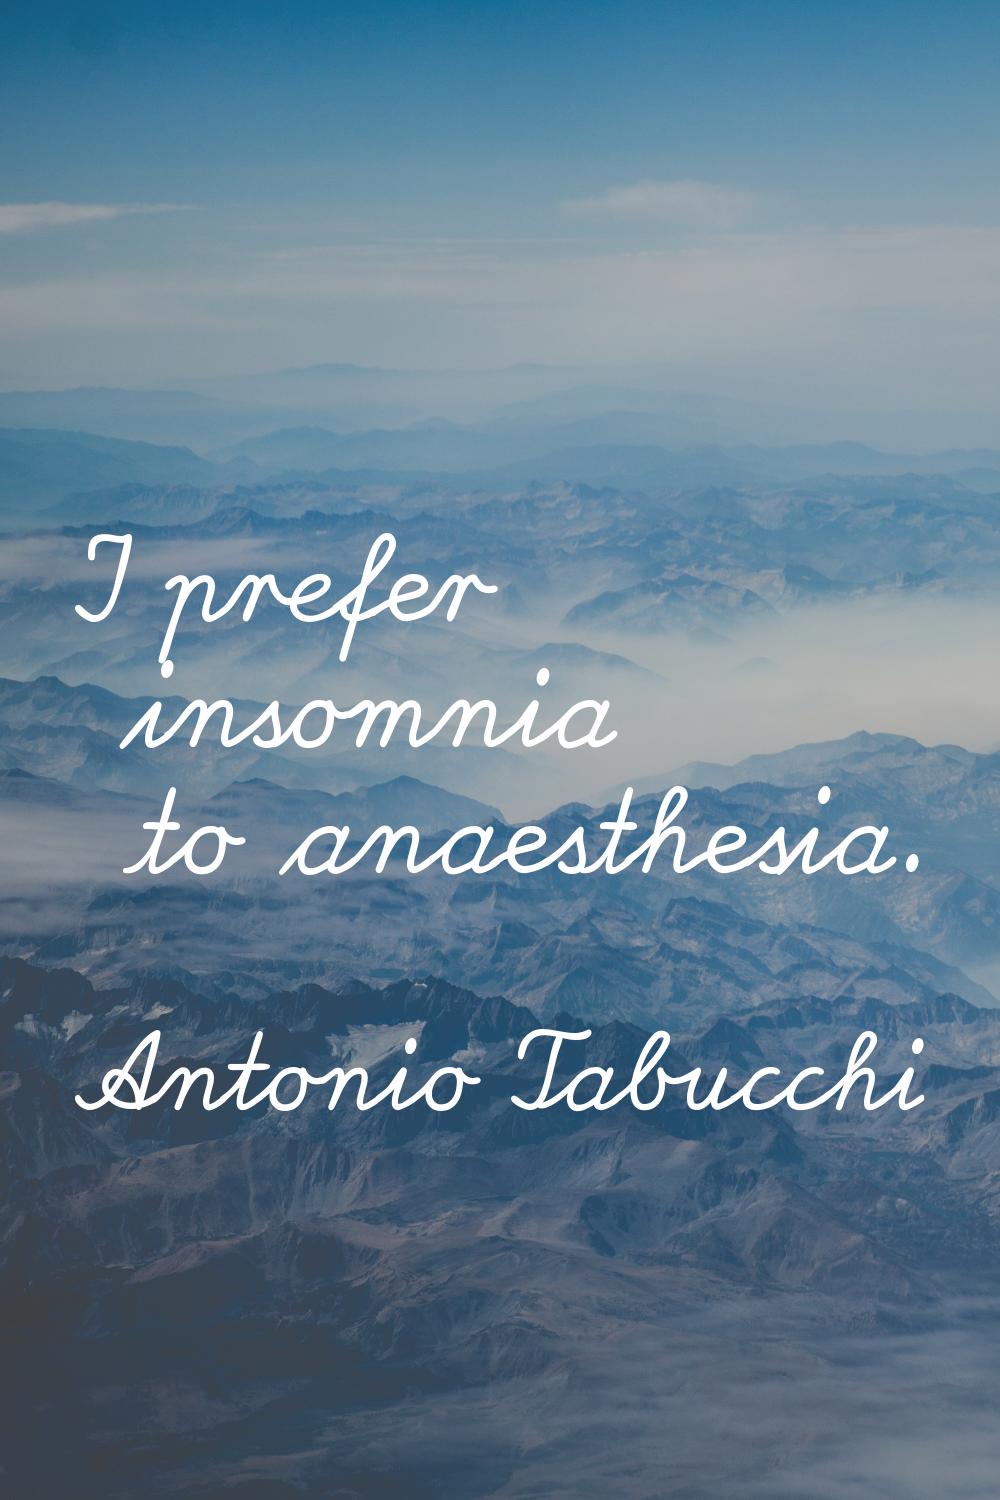 I prefer insomnia to anaesthesia.